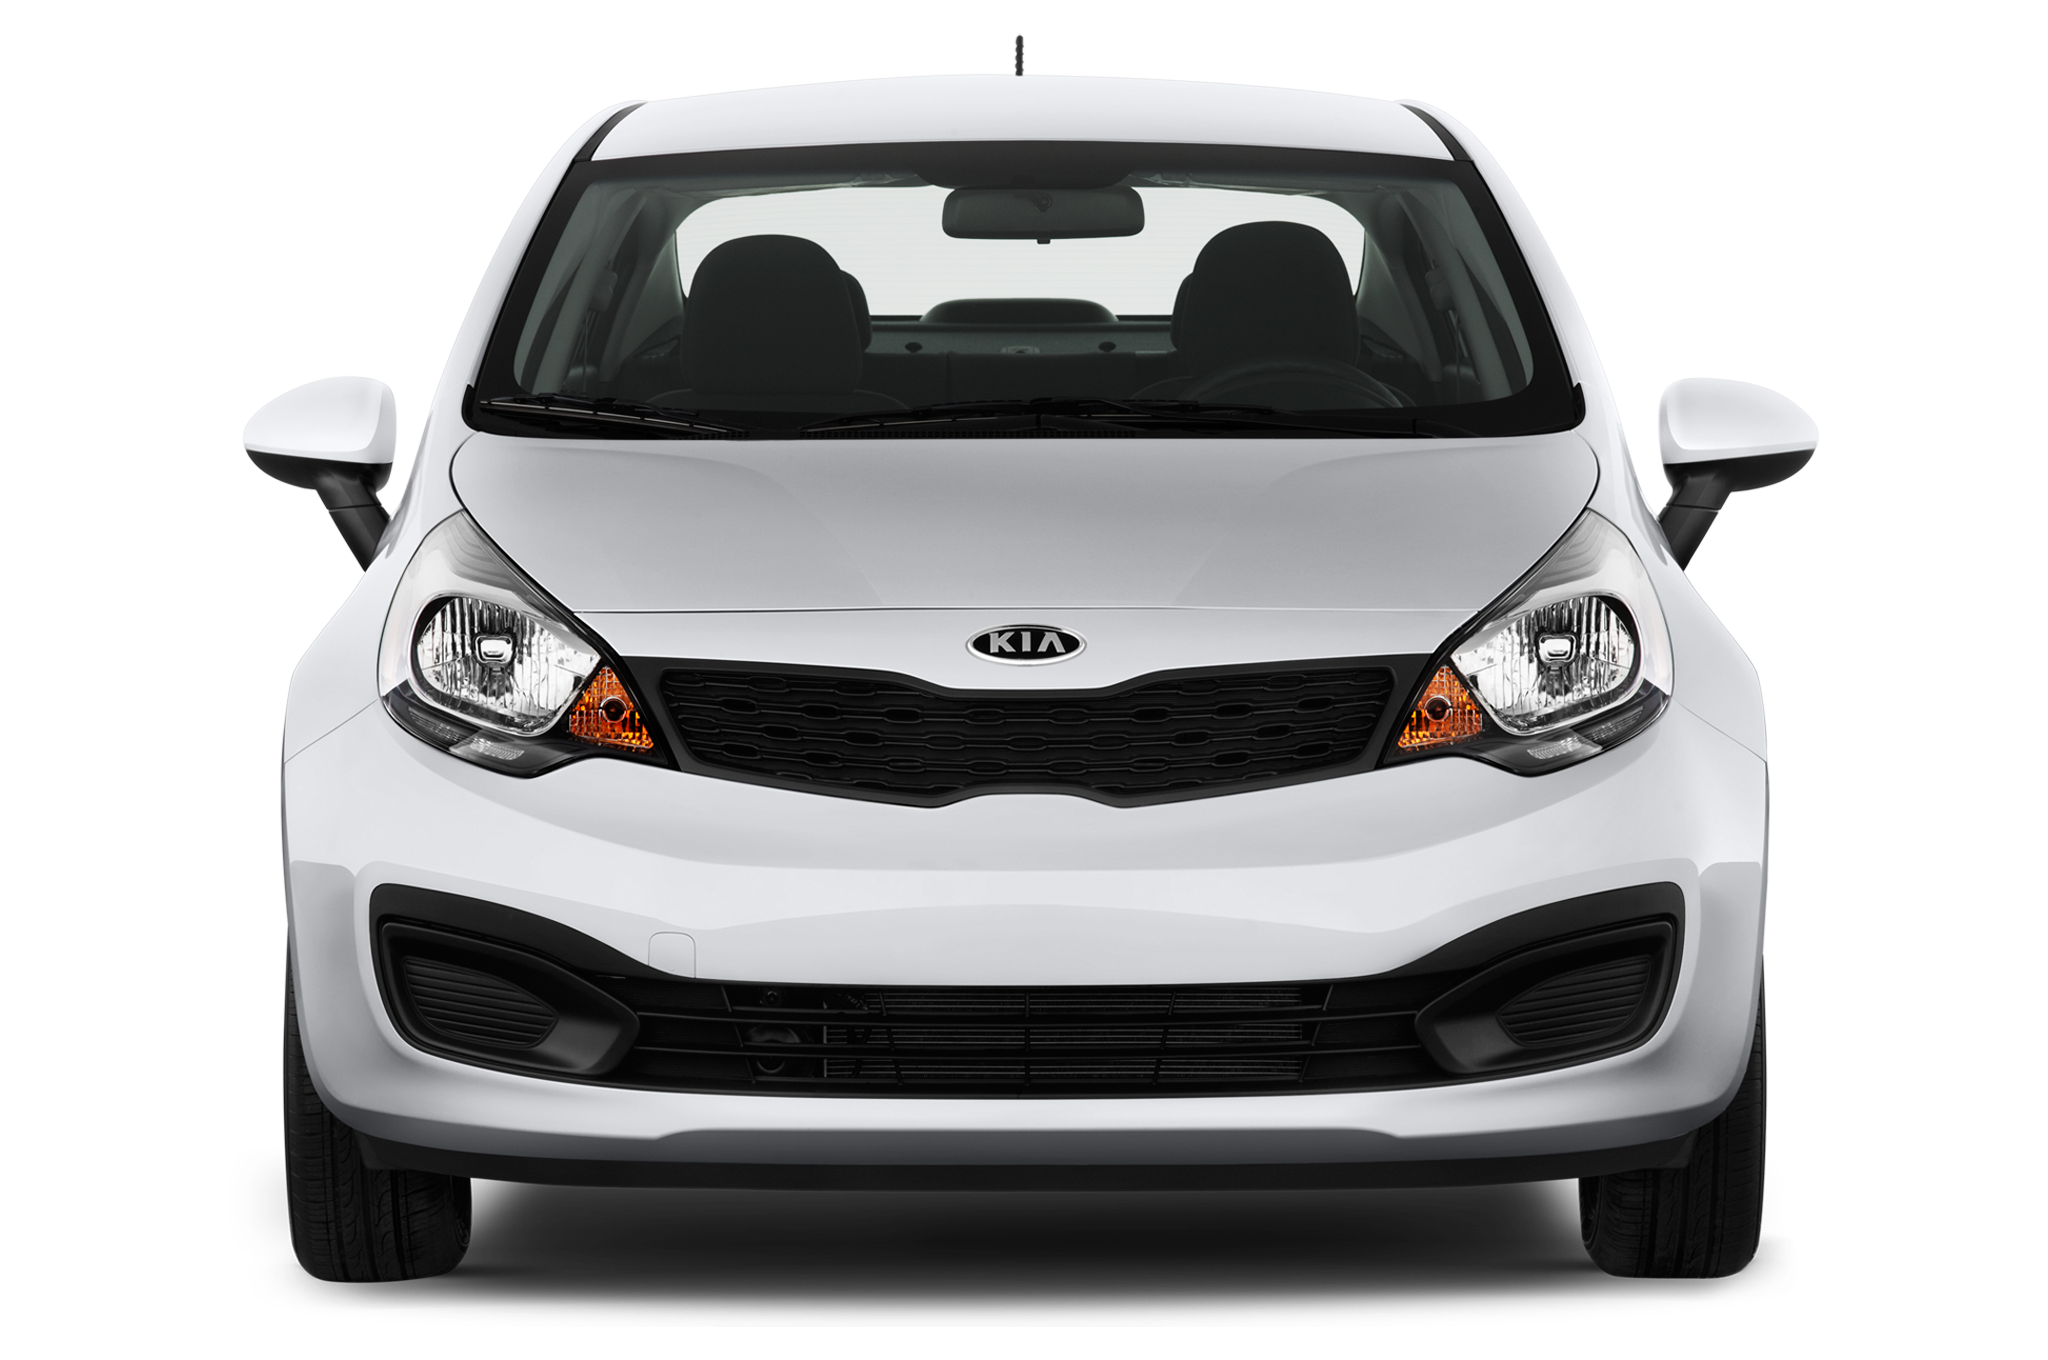 Download PNG image - Kia Car PNG Transparent Image 